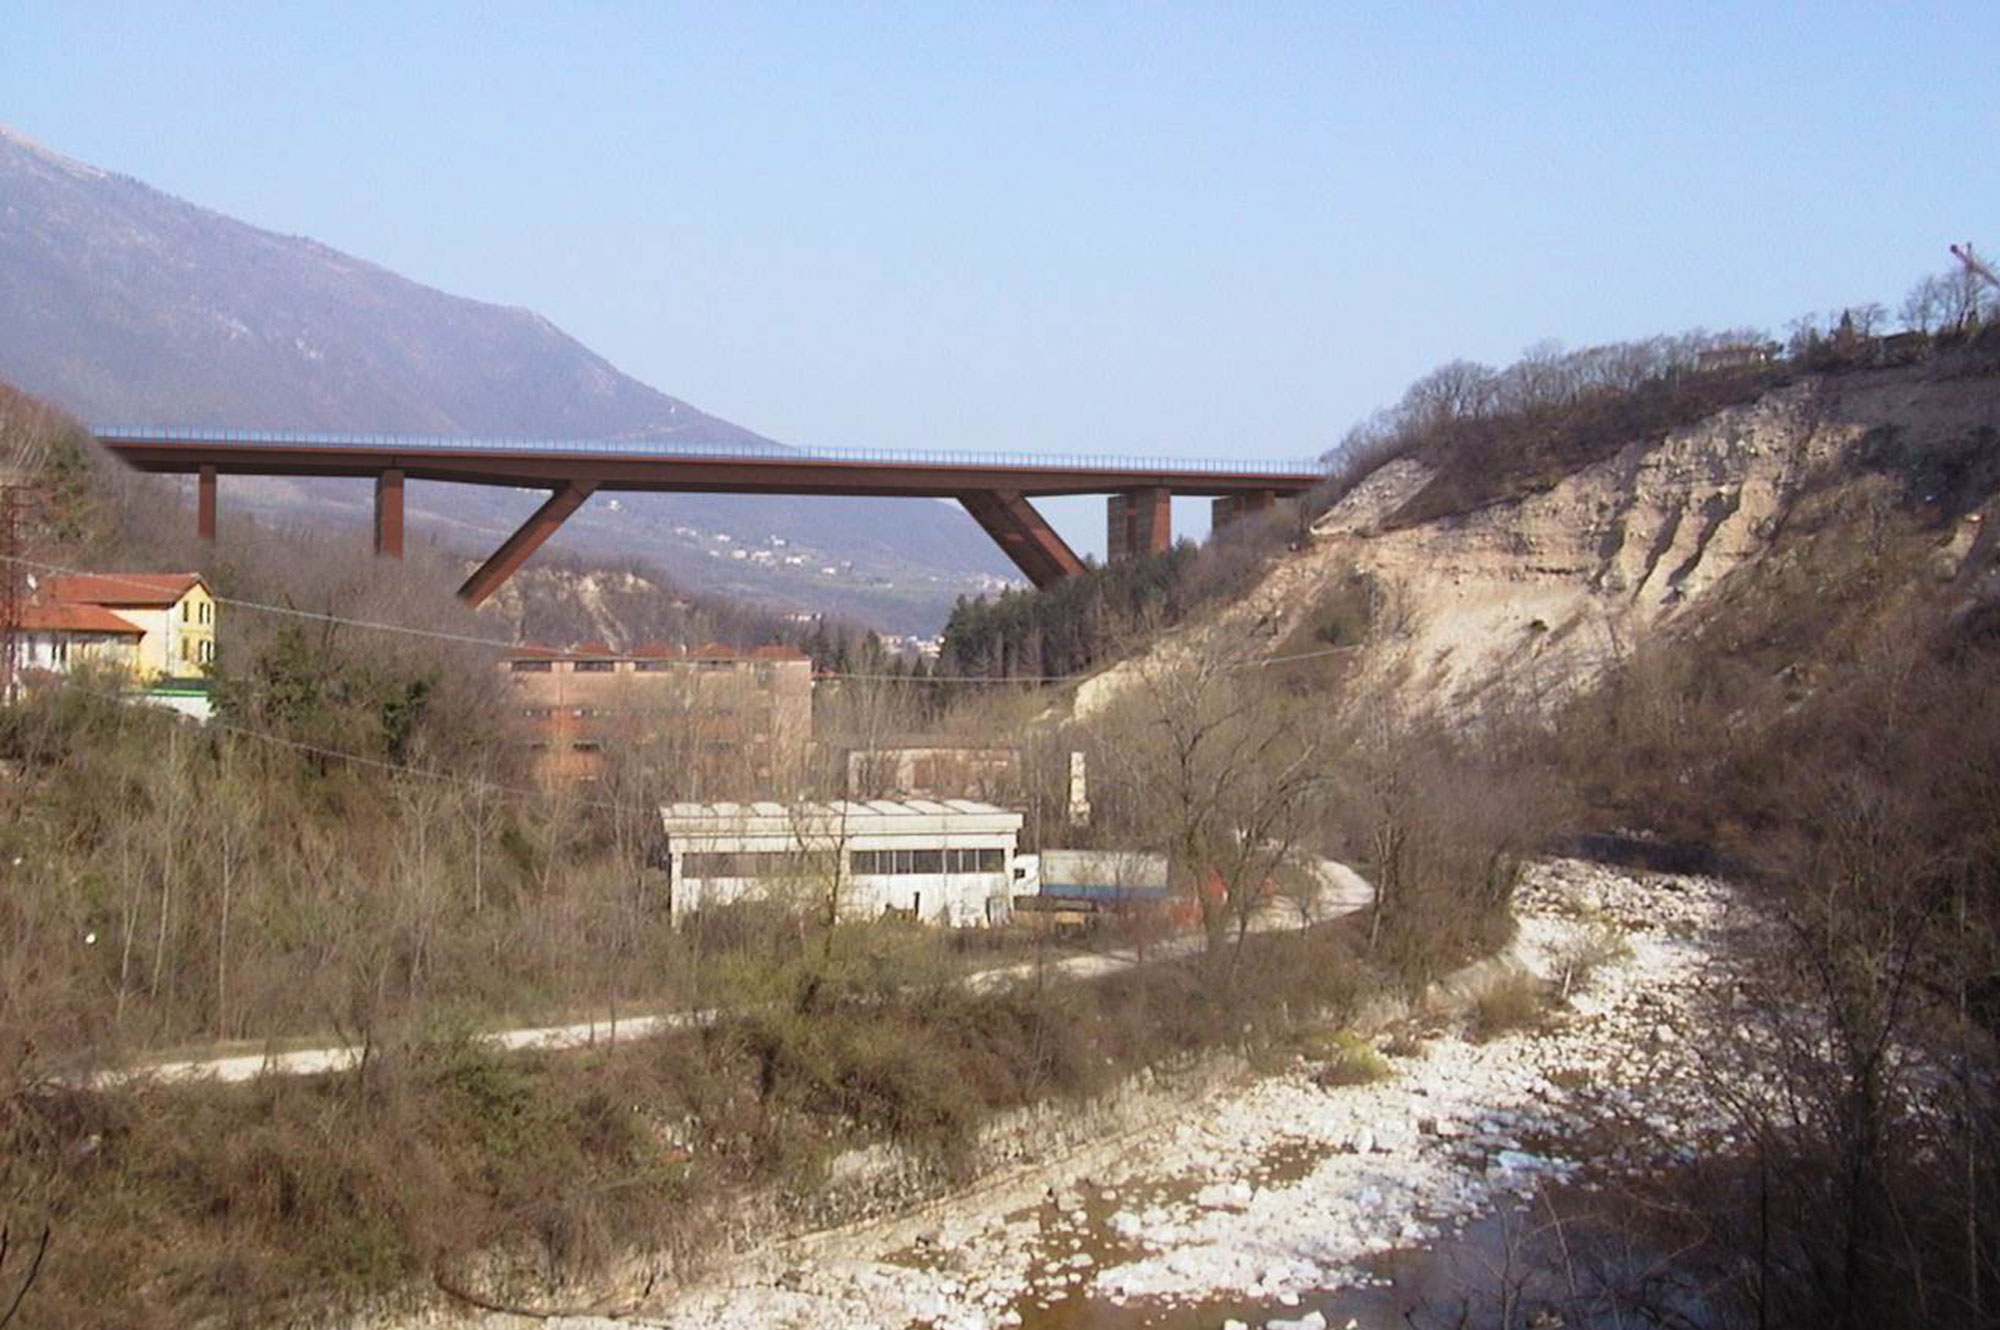 A31 Trento – Rovigo highway between Trento – Valdastico – Piovene Rocchette